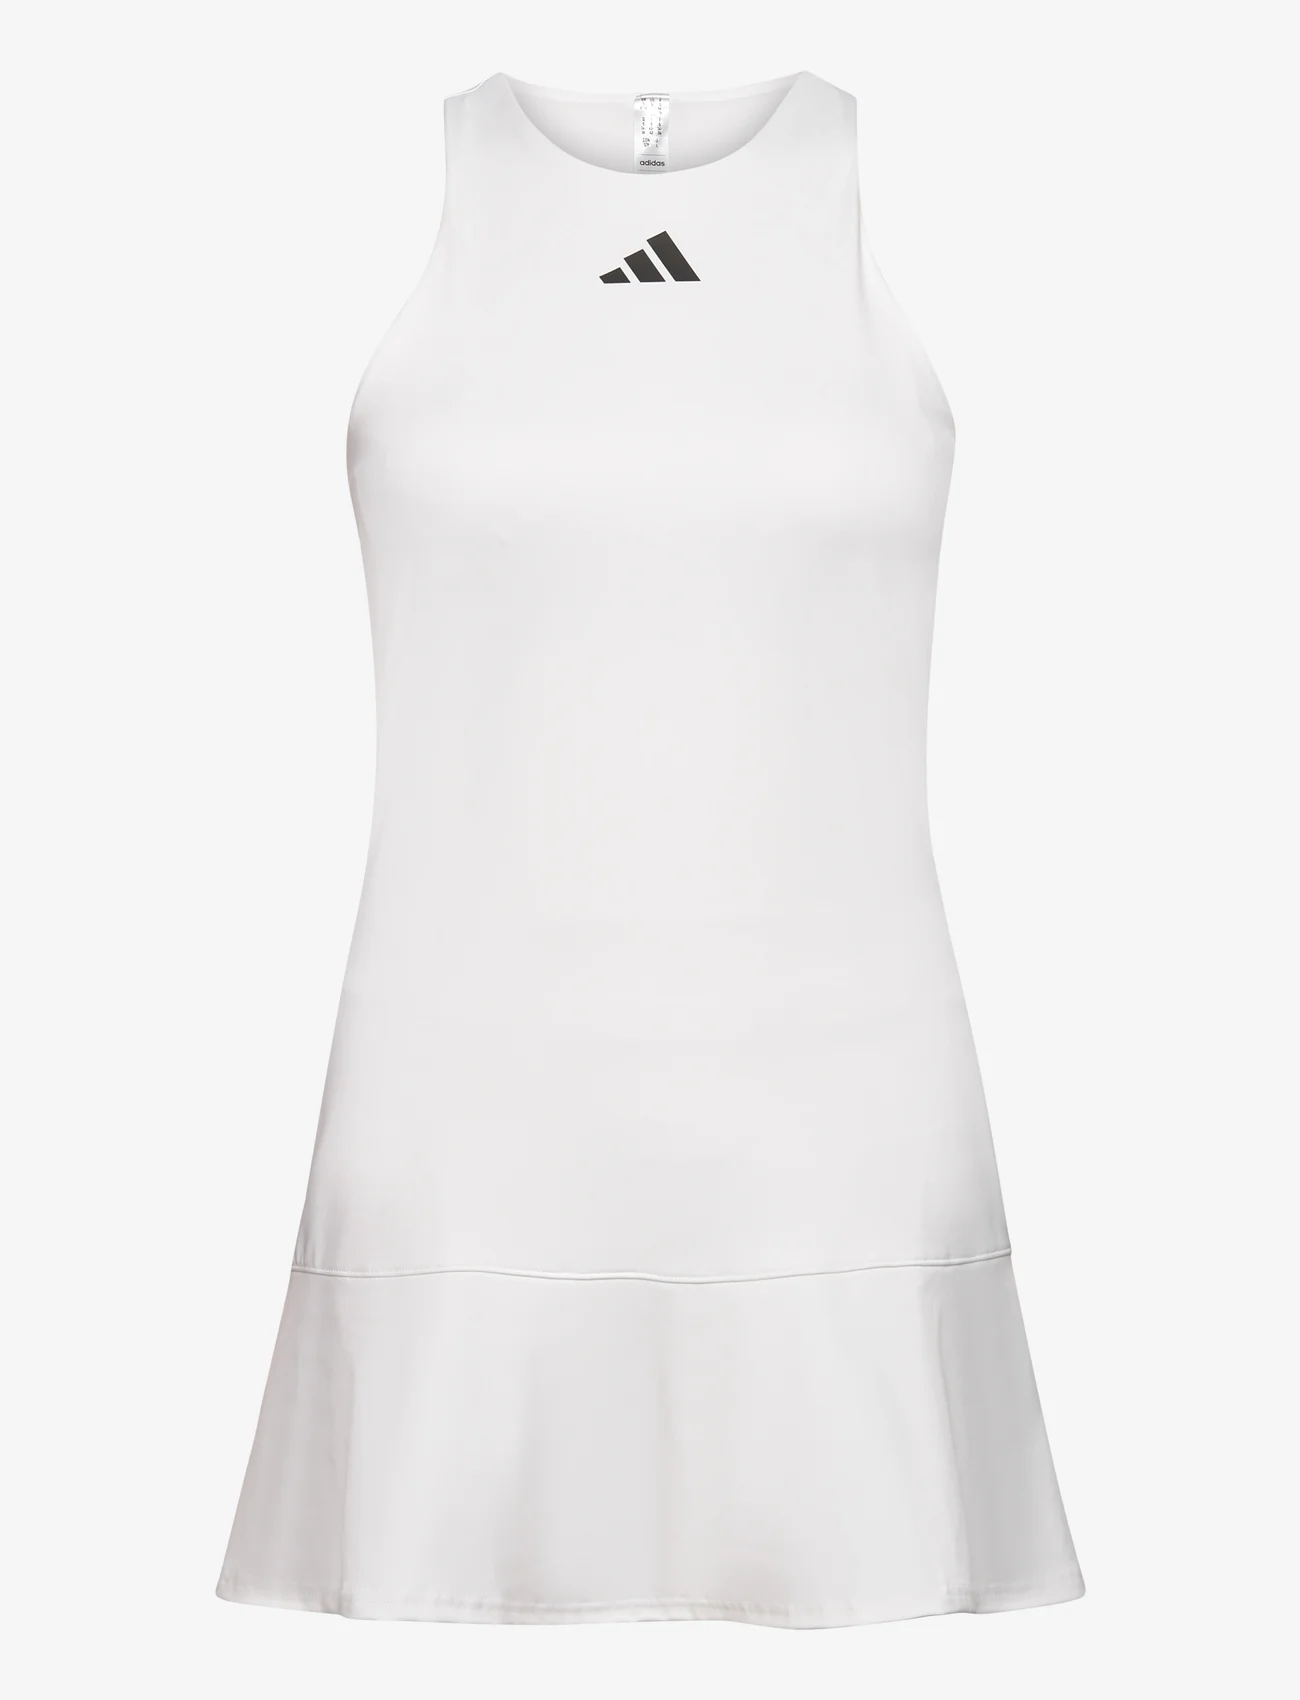 adidas Performance - Y-DRESS - sportkleider - 000/white - 0